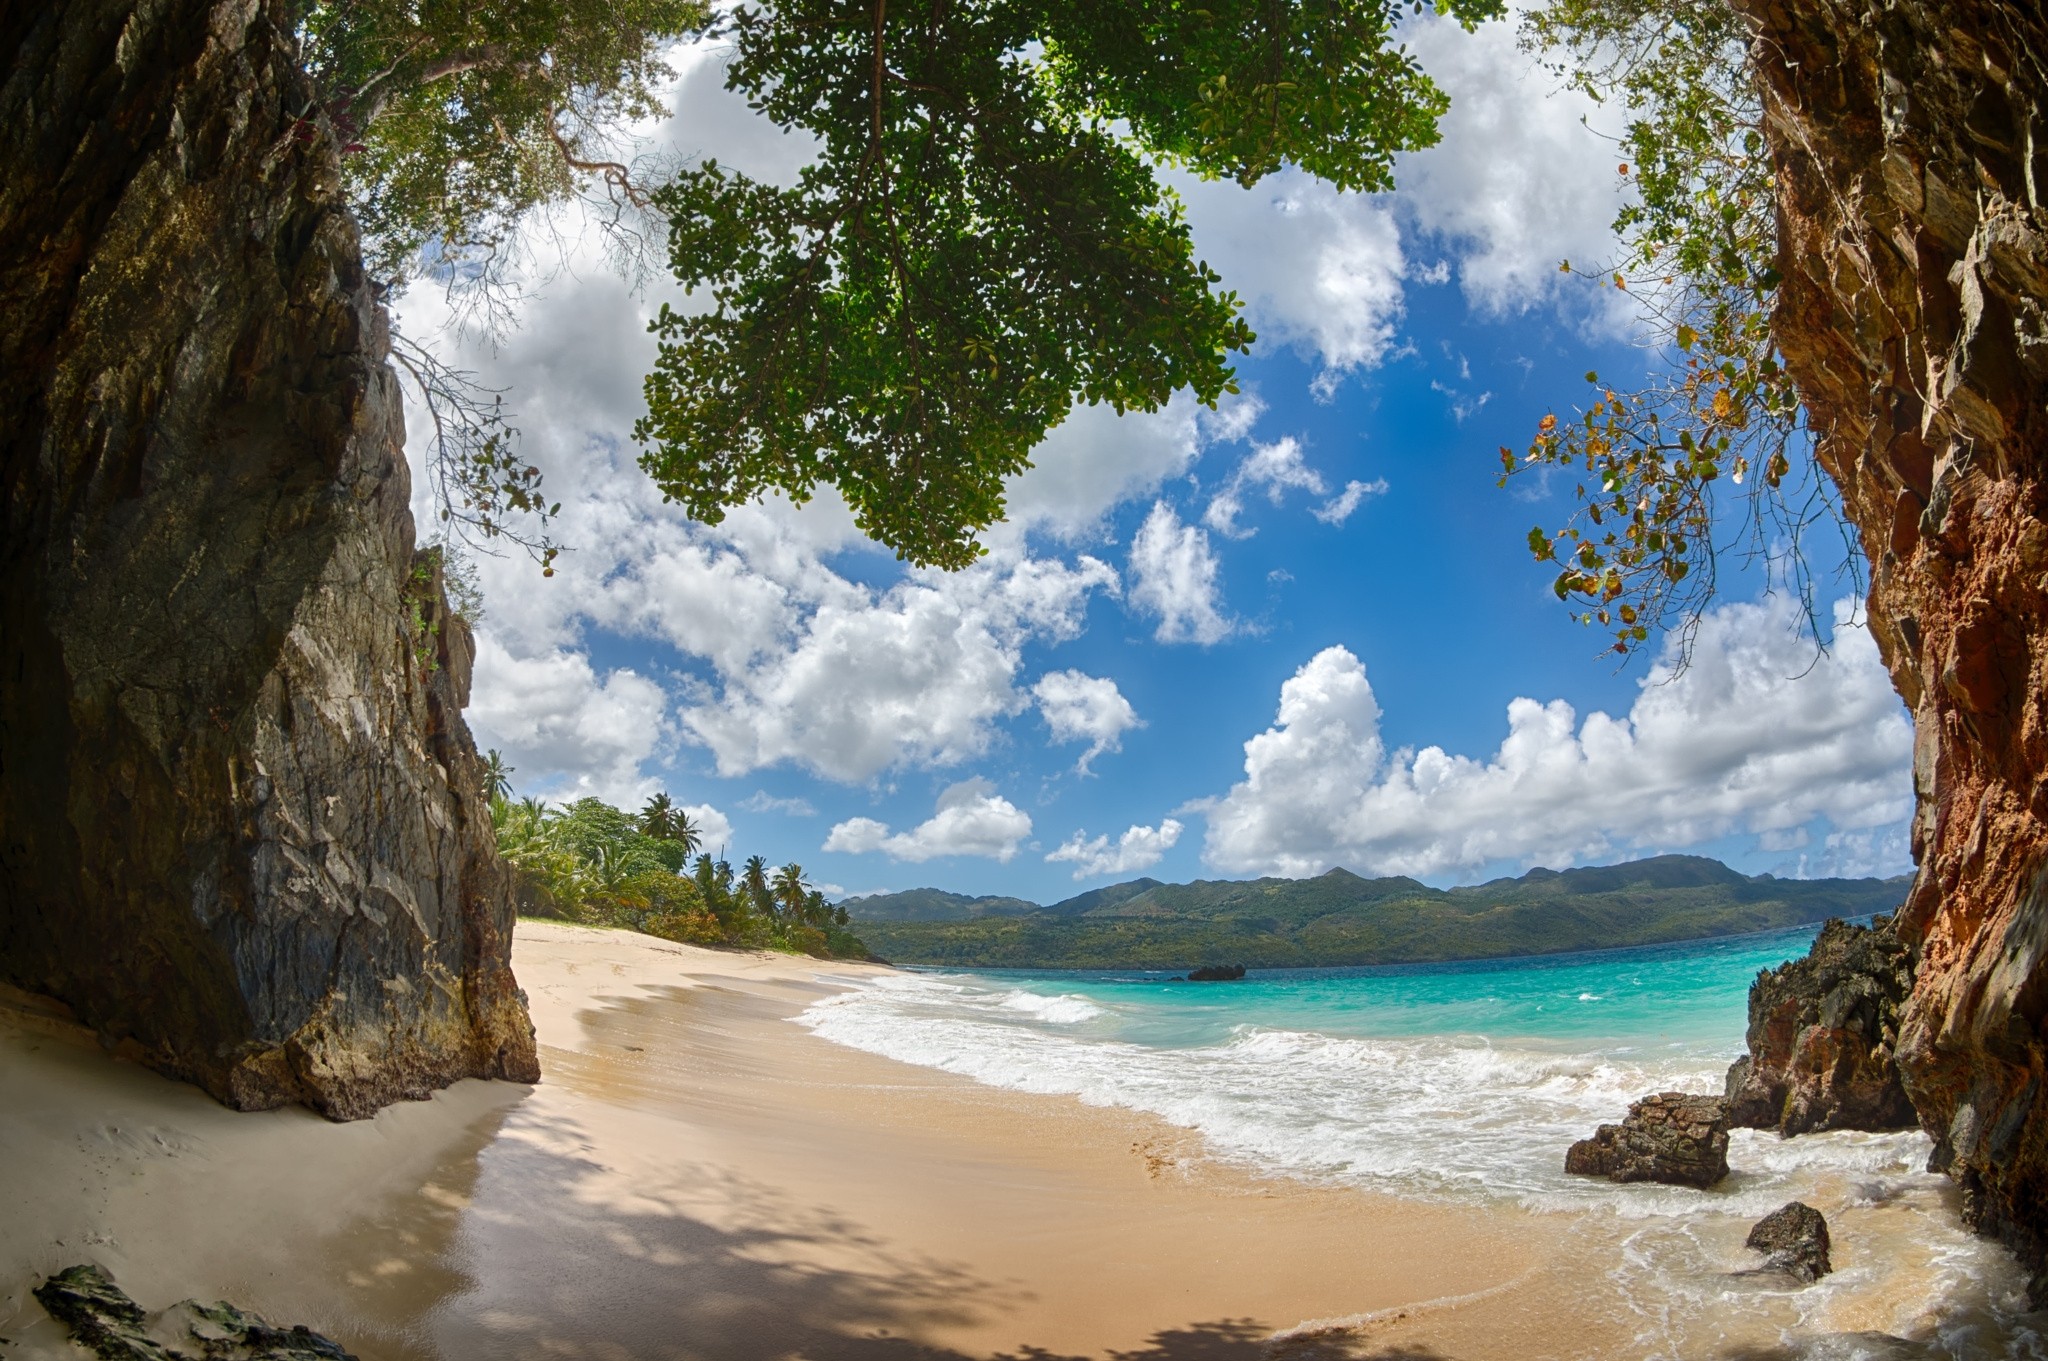 Beach Tropical Sand Mountains Caribbean Palm Trees Clouds Rock Dominican Republic Island Nature Land 2048x1361